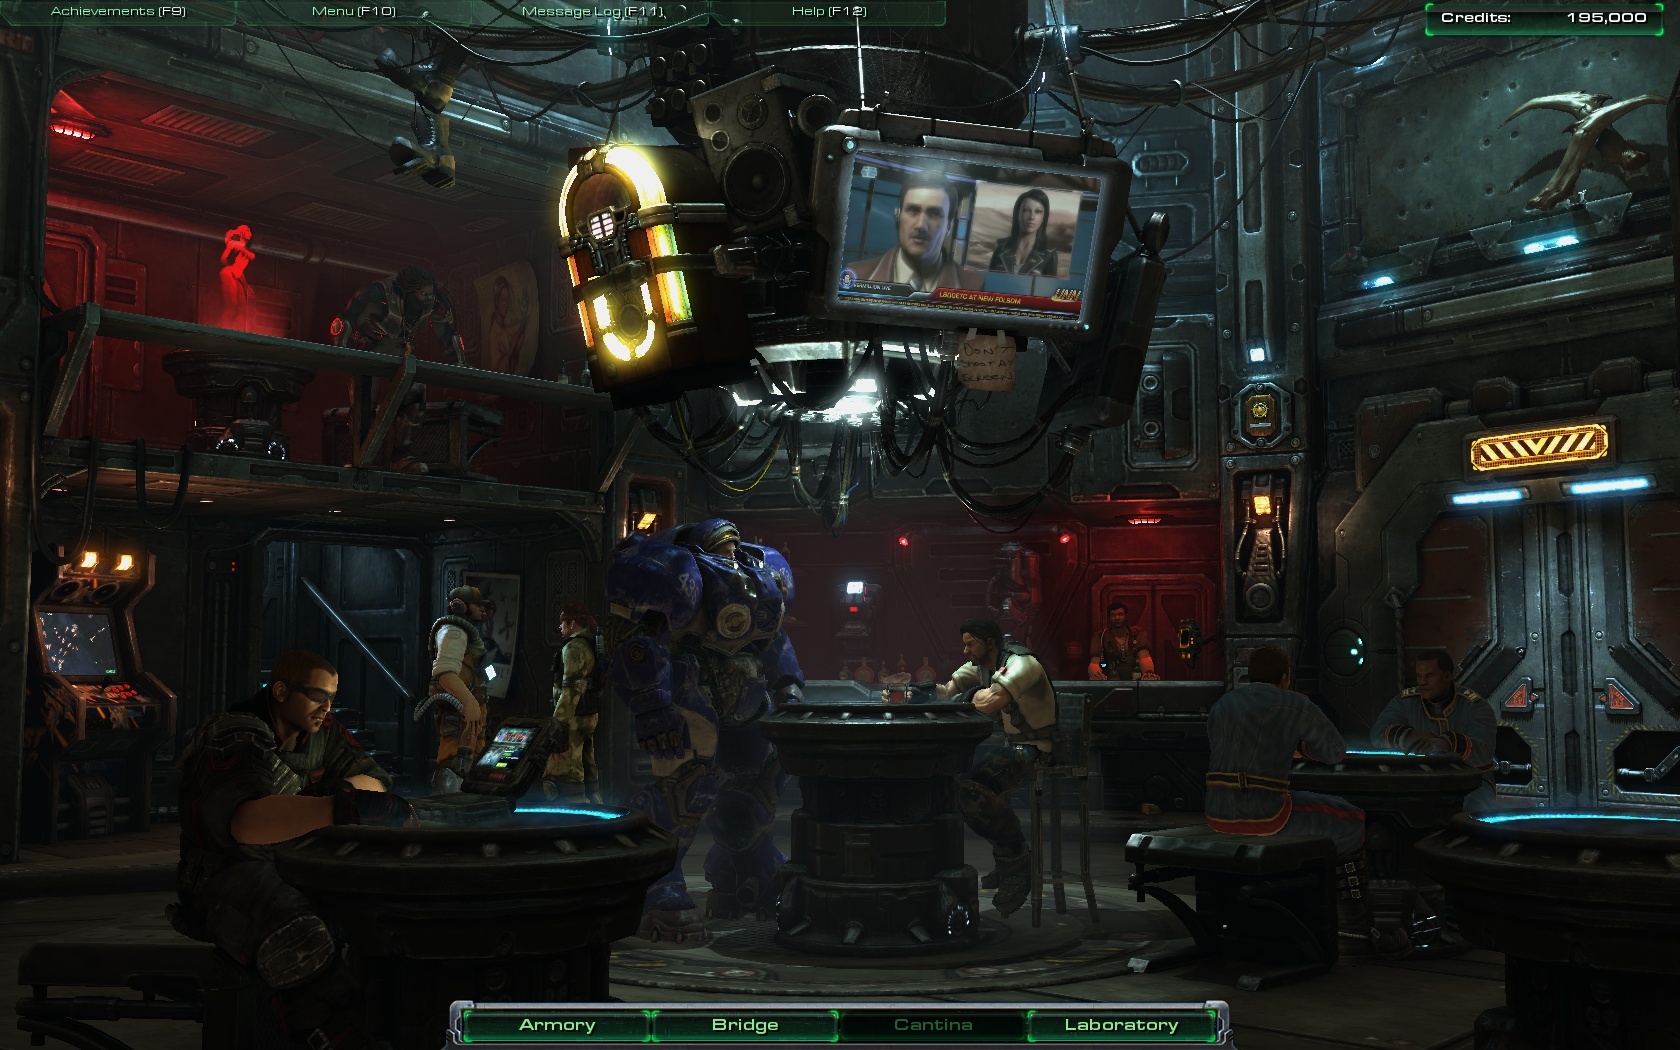 Screenshot de la campagne solo de StarCraft II: Wings of Liberty.